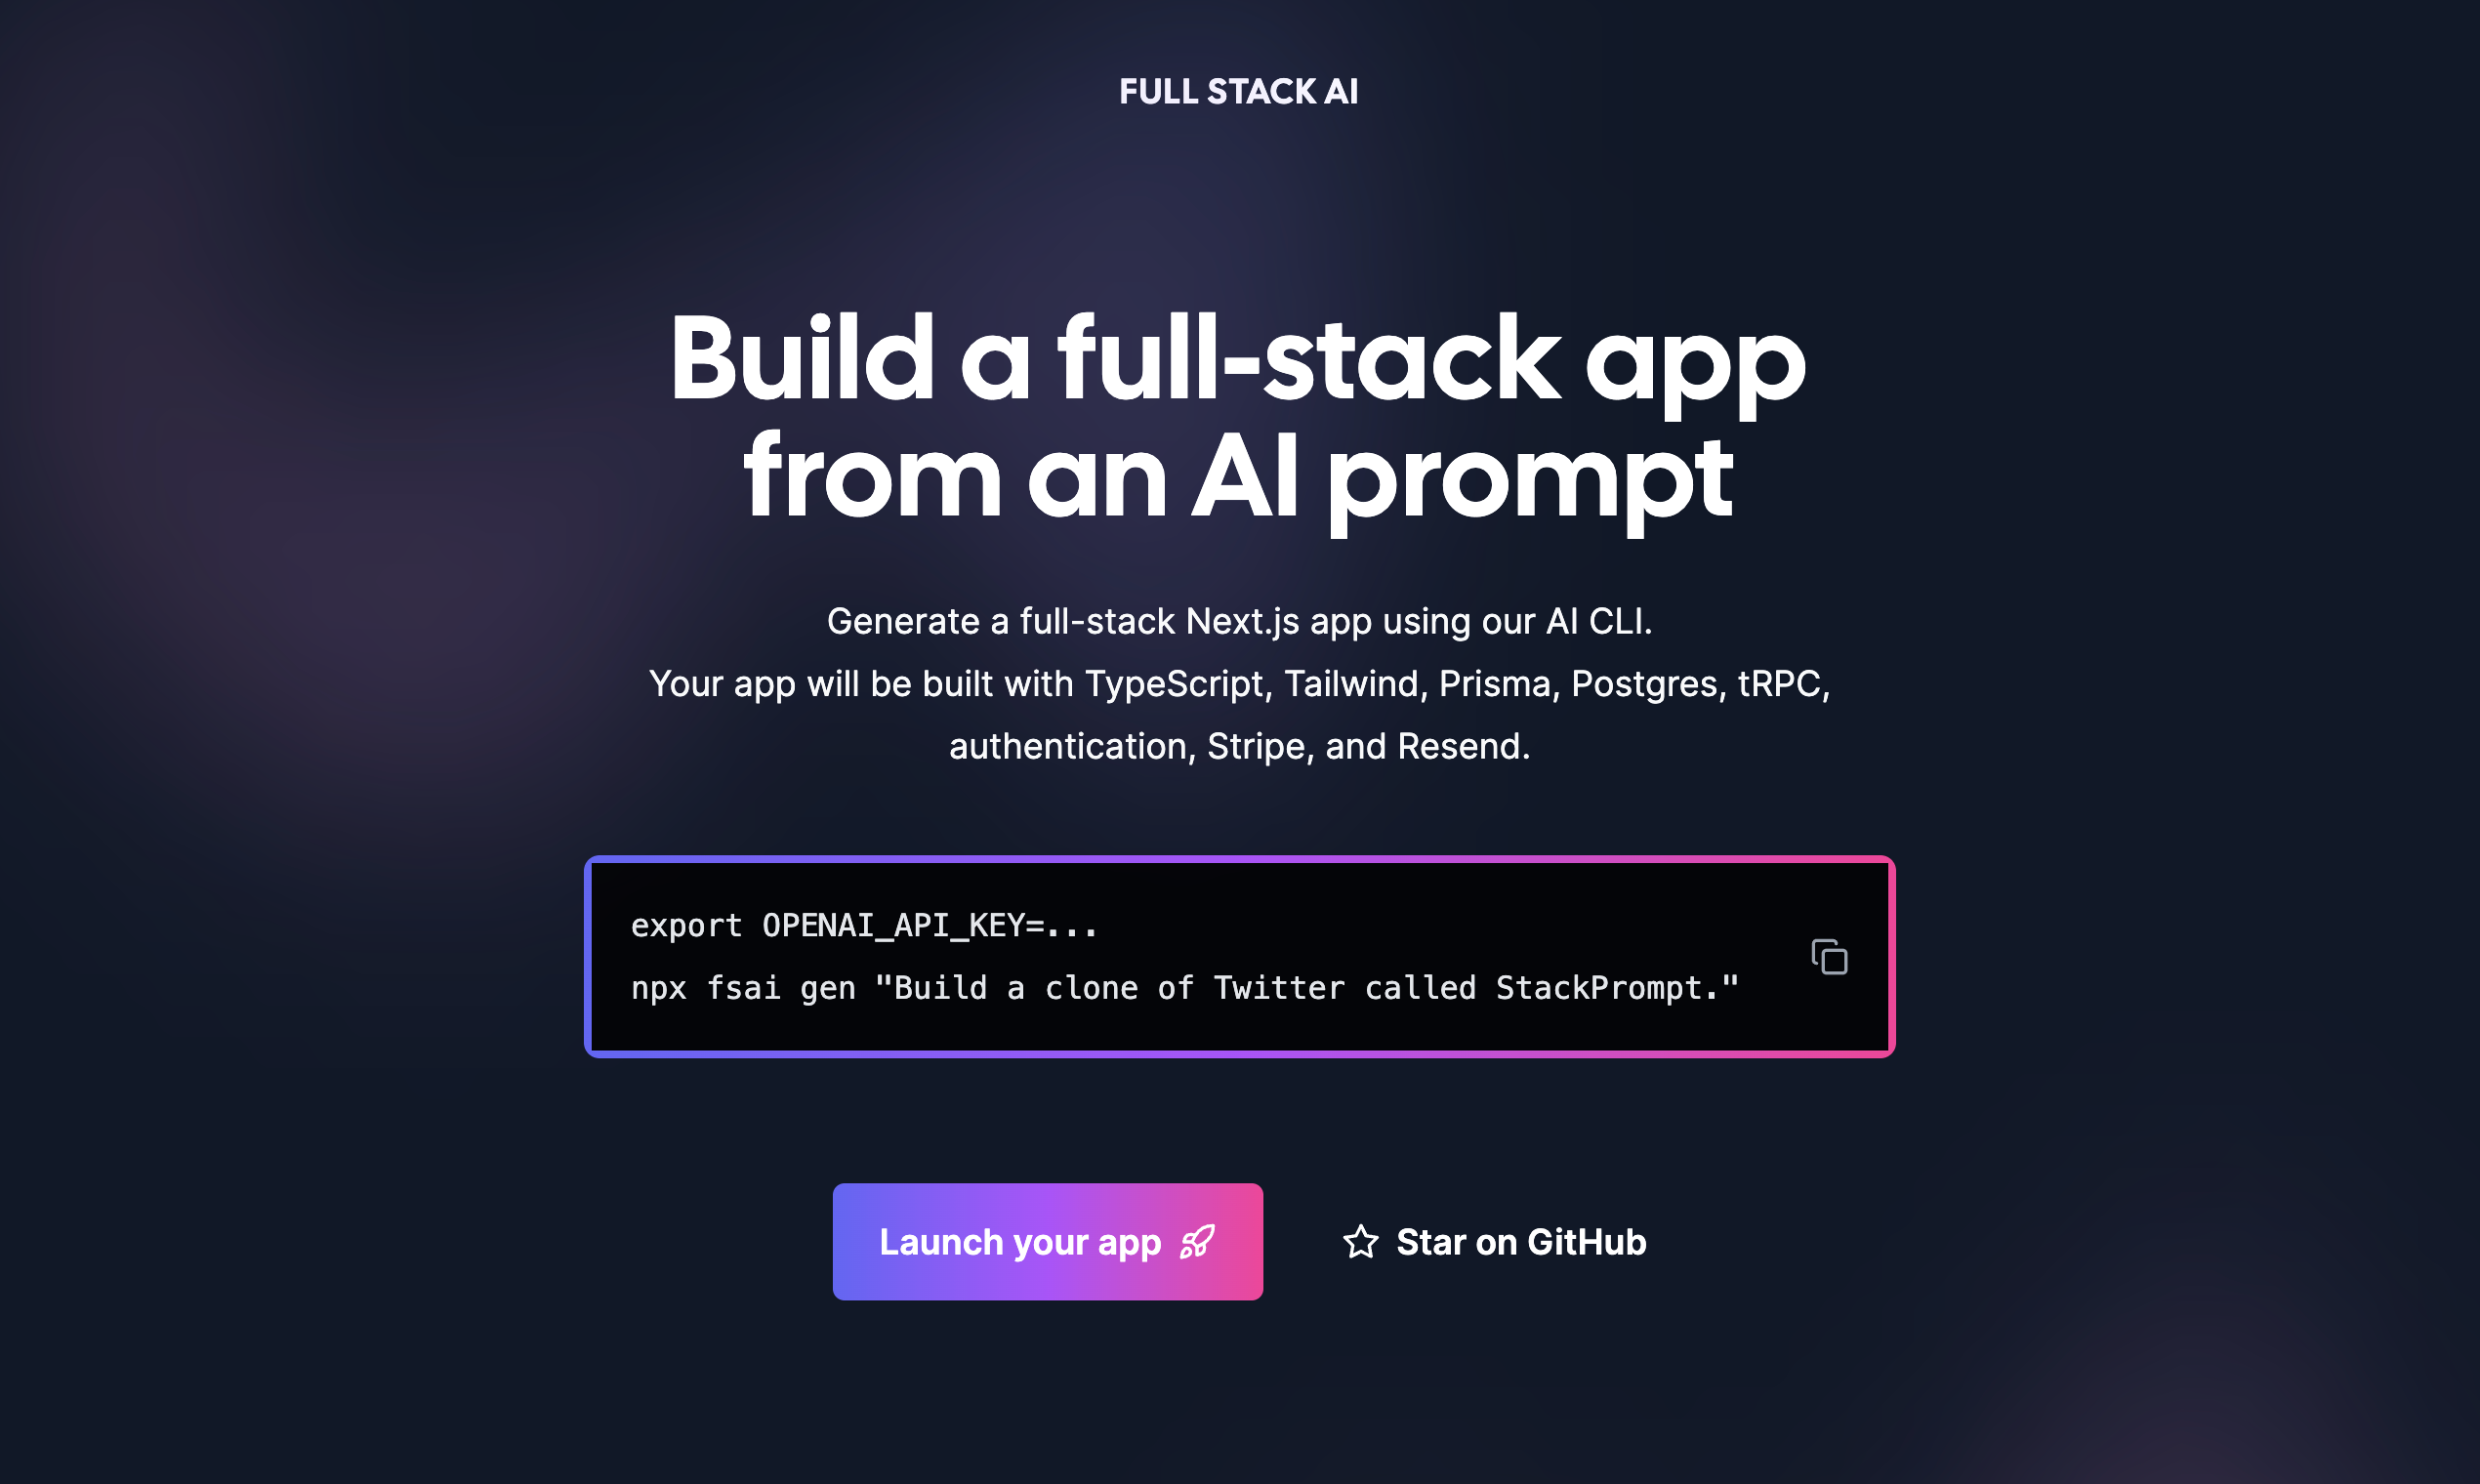 Full Stack AI demo